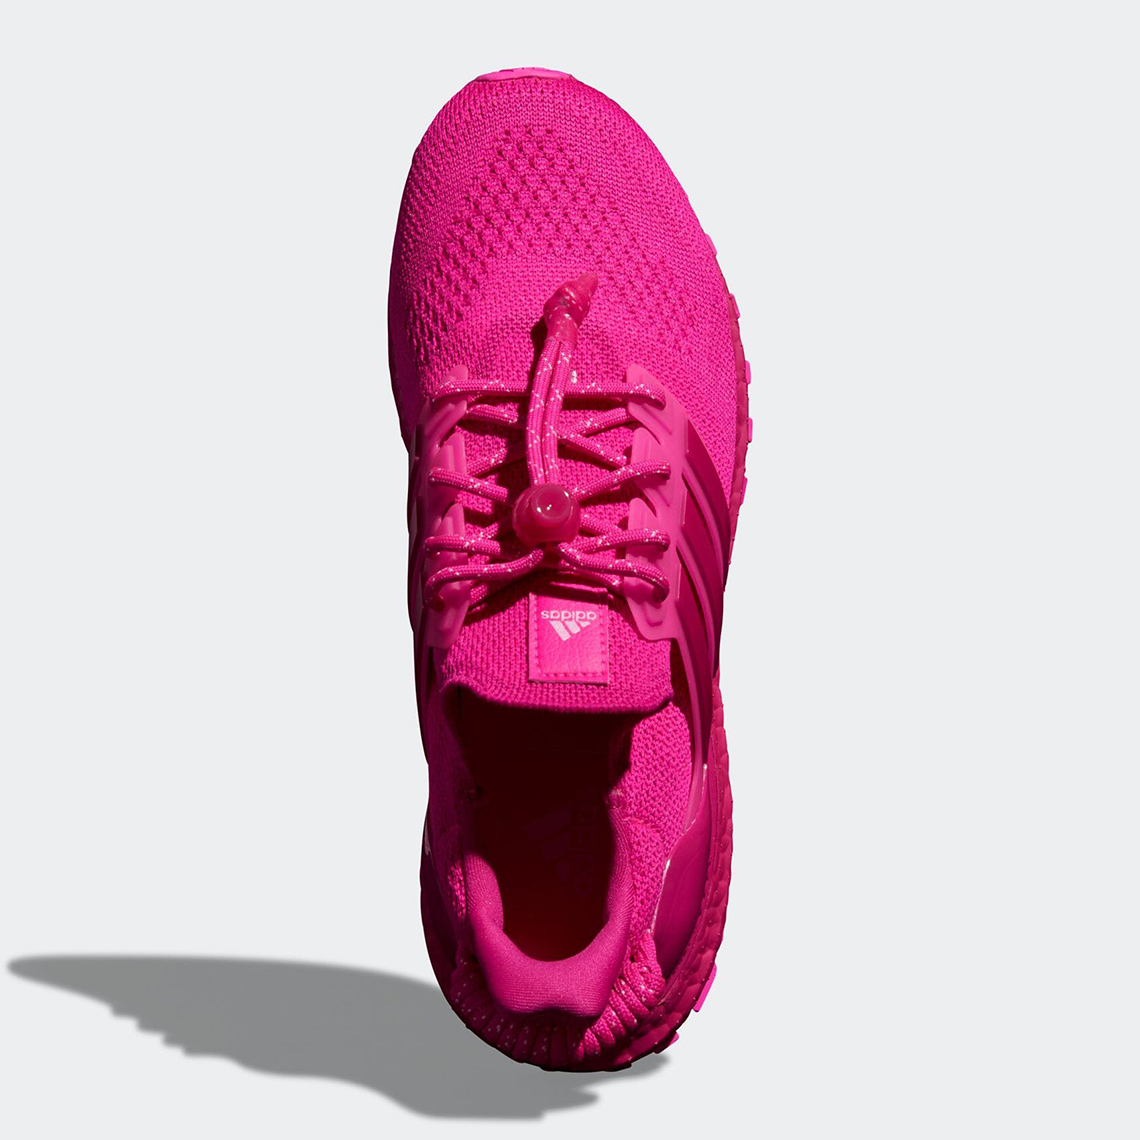 Beyonce Ivy Park Sneakers adidas Ultraboost Og Pink 2